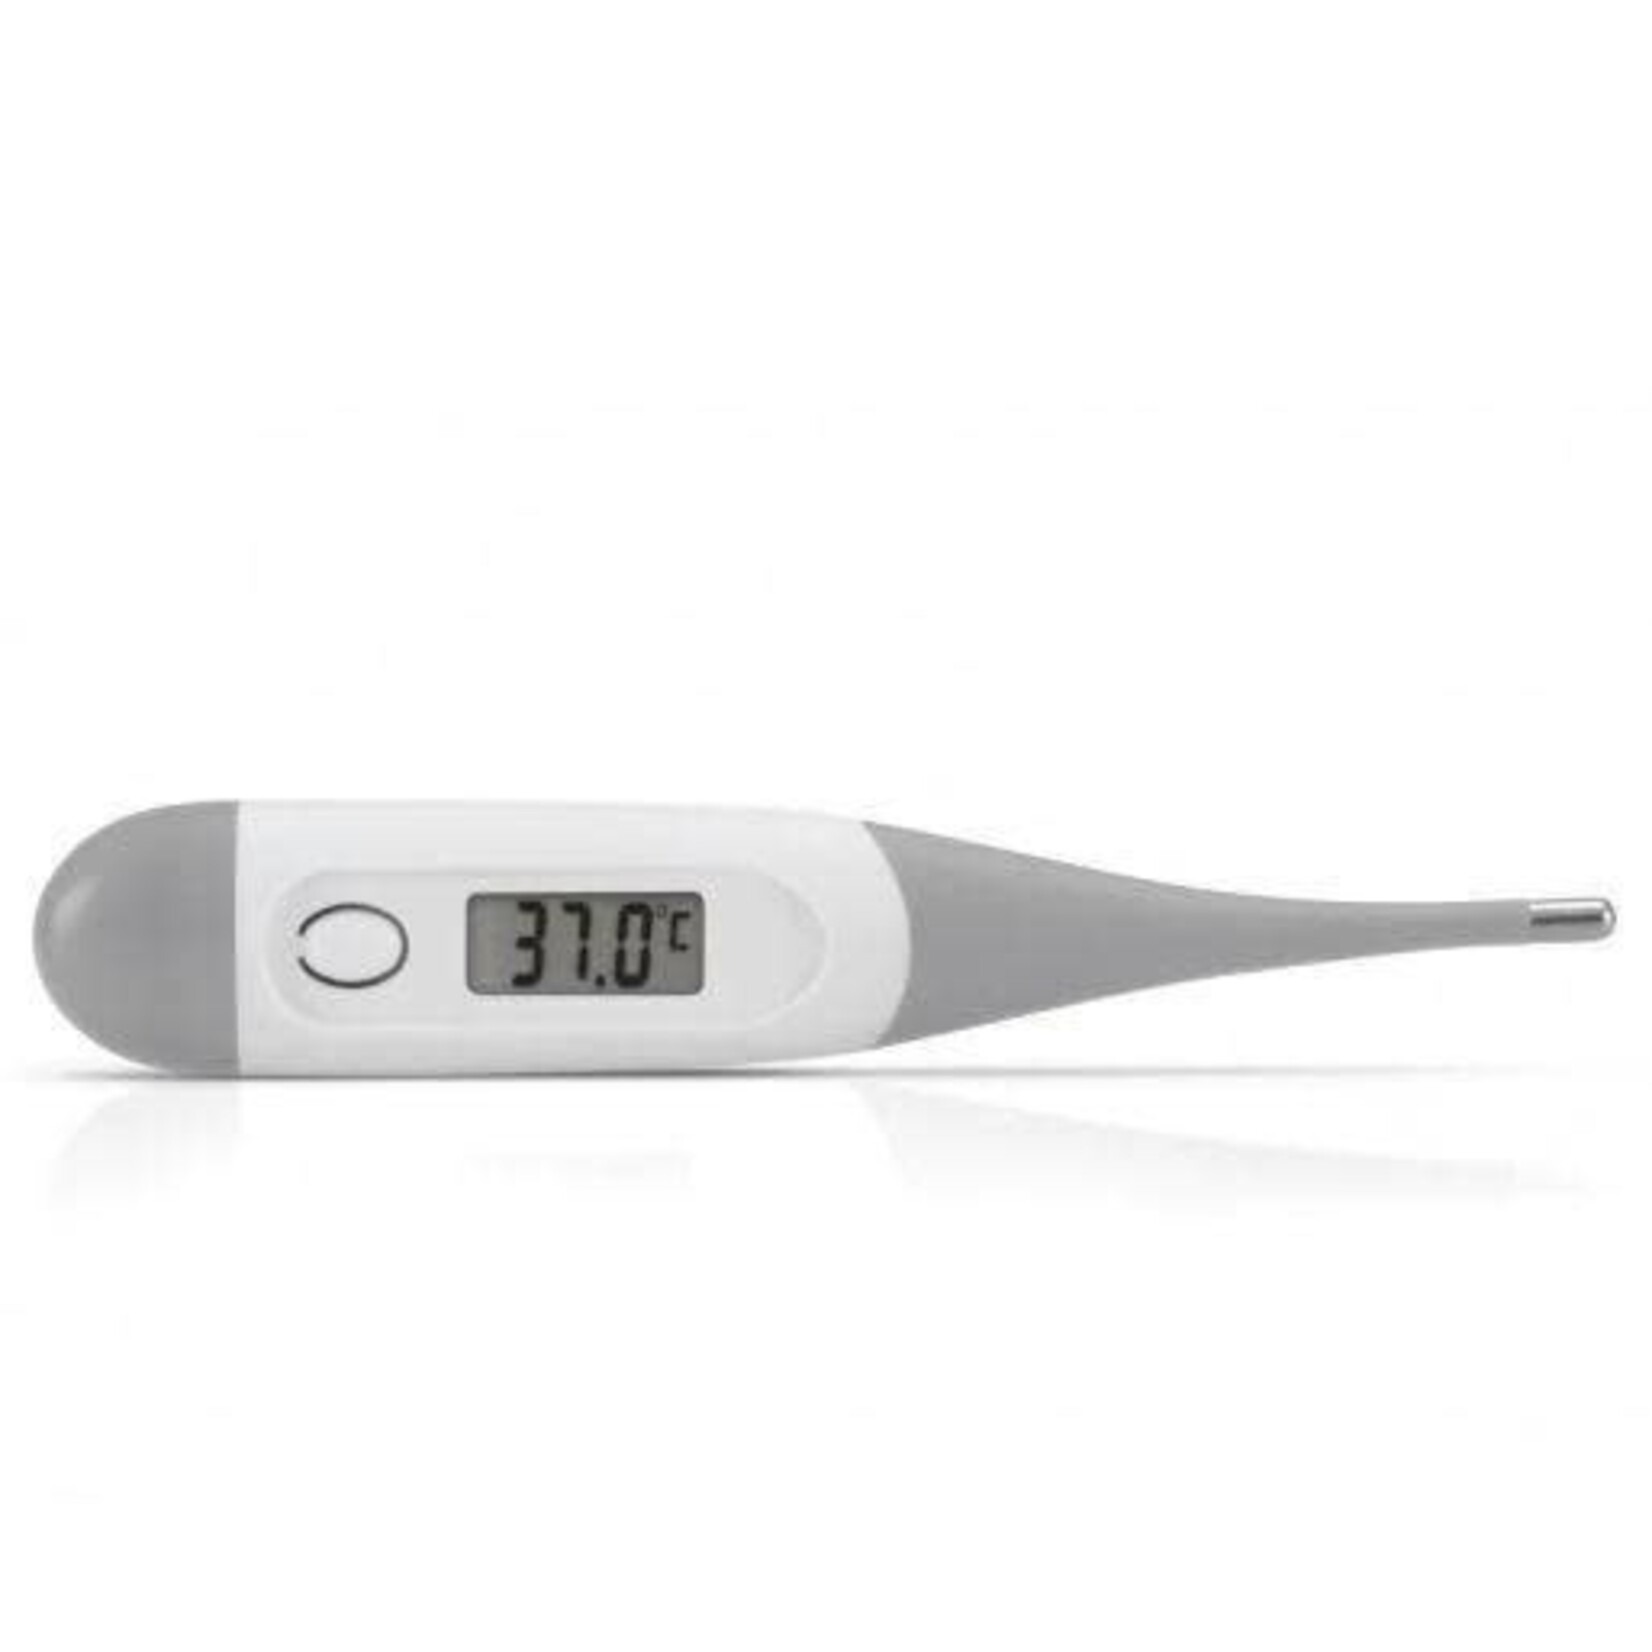 Alecto Alecto - BC-19GS - Digital thermometer - Gray